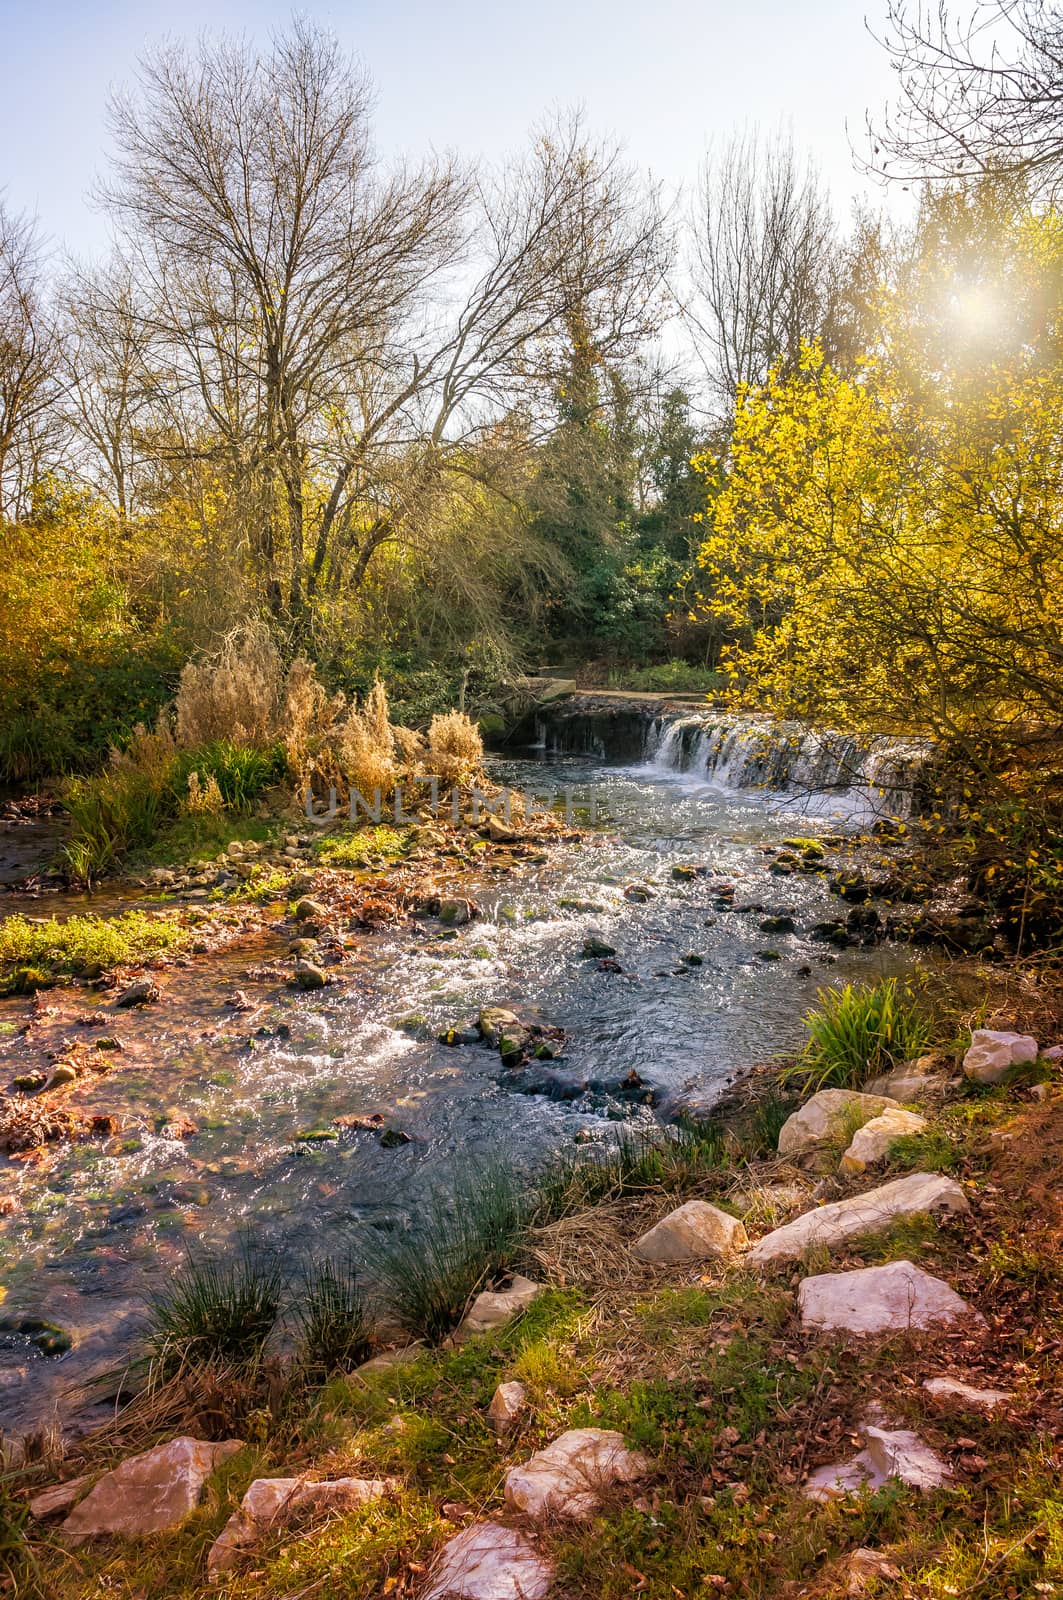 Little Stream in Provence by MaxalTamor